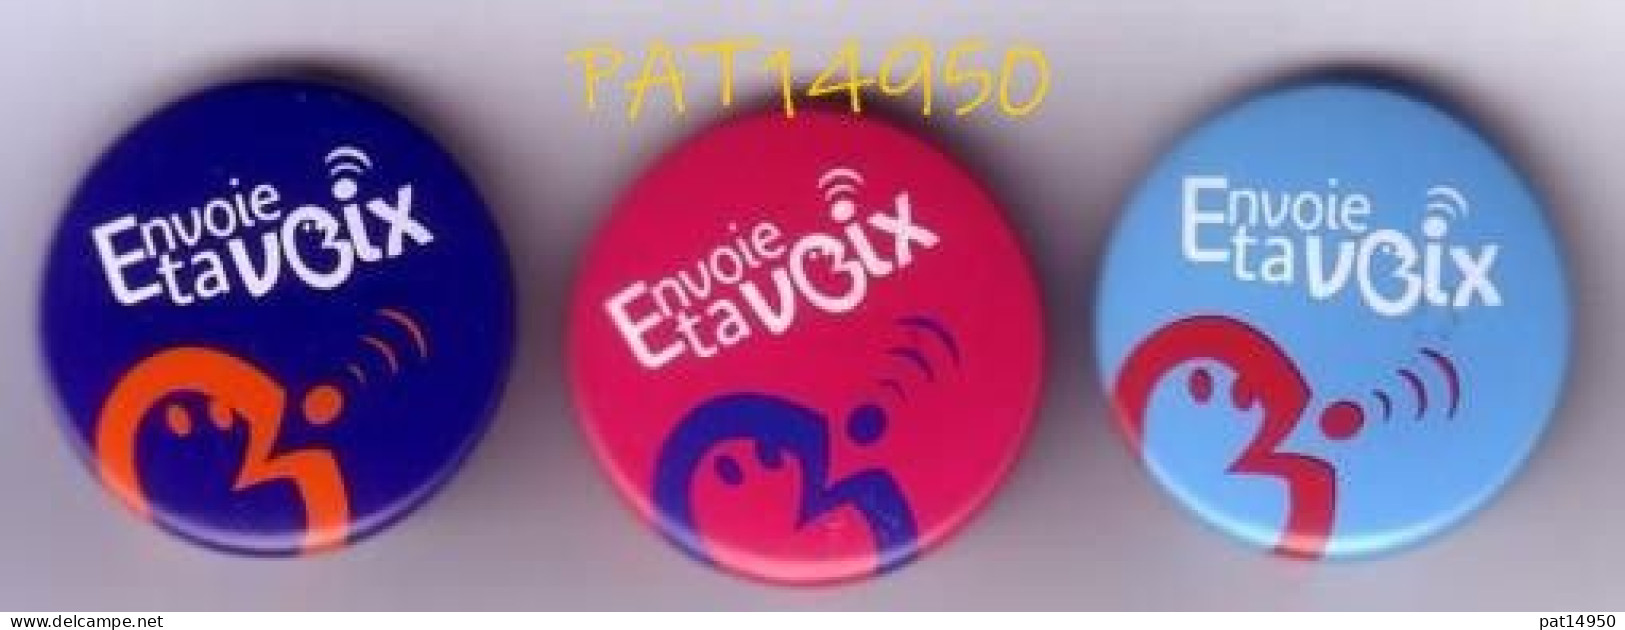 PAT14950 FRANCE TELECOM    MESSAGE EXPRESS  Envoie Ta VOIX  Lot De 3 Badges Différents - France Telecom